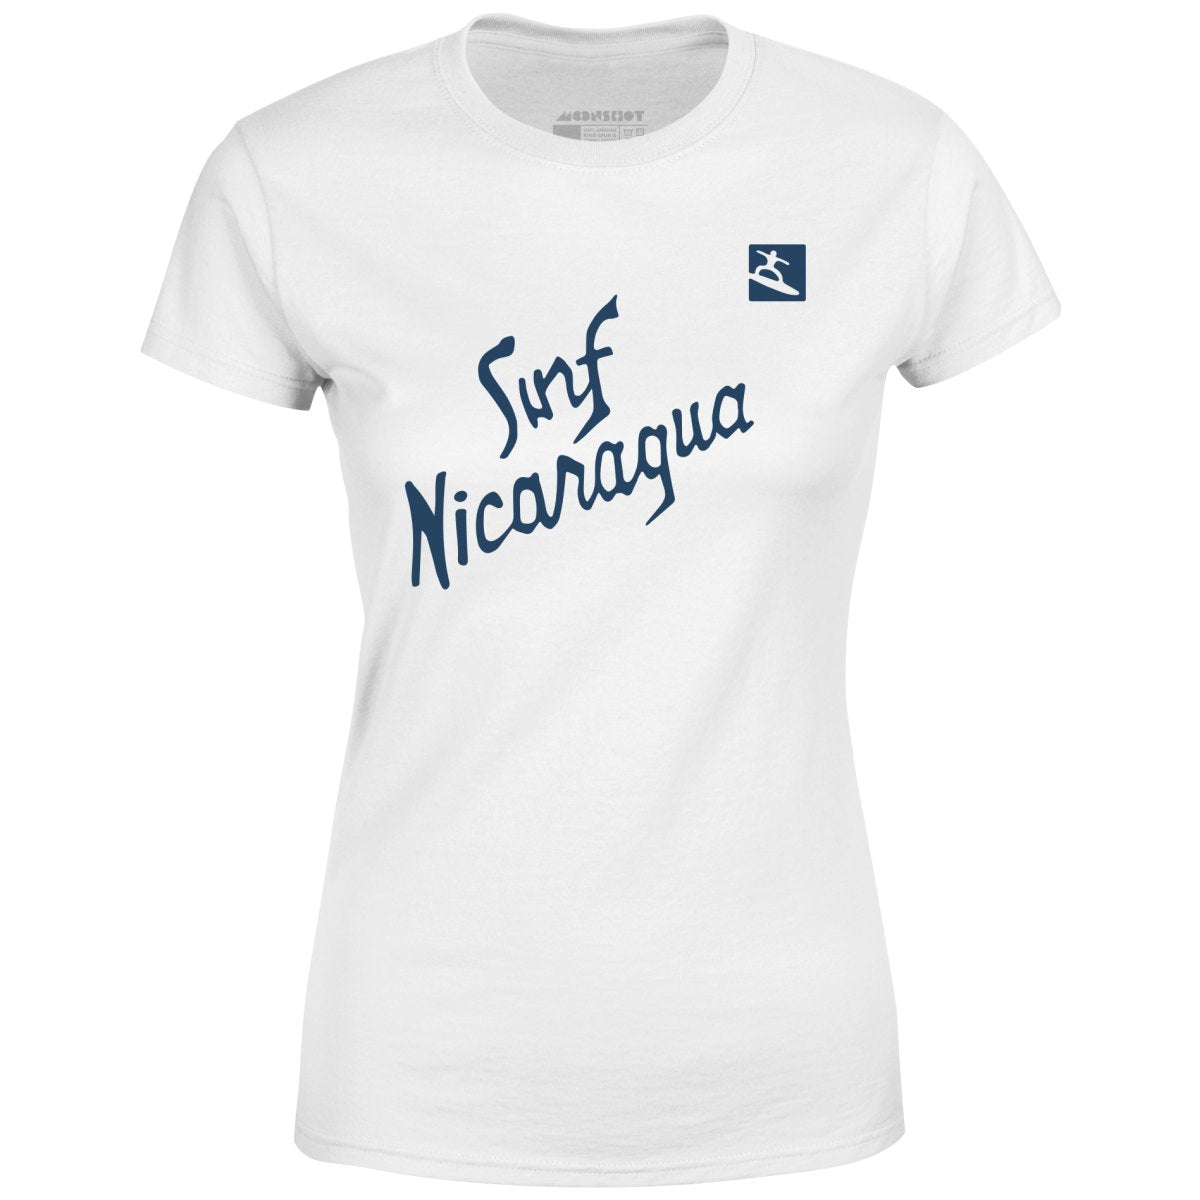 Real Genius - Surf Nicaragua - Women's T-Shirt